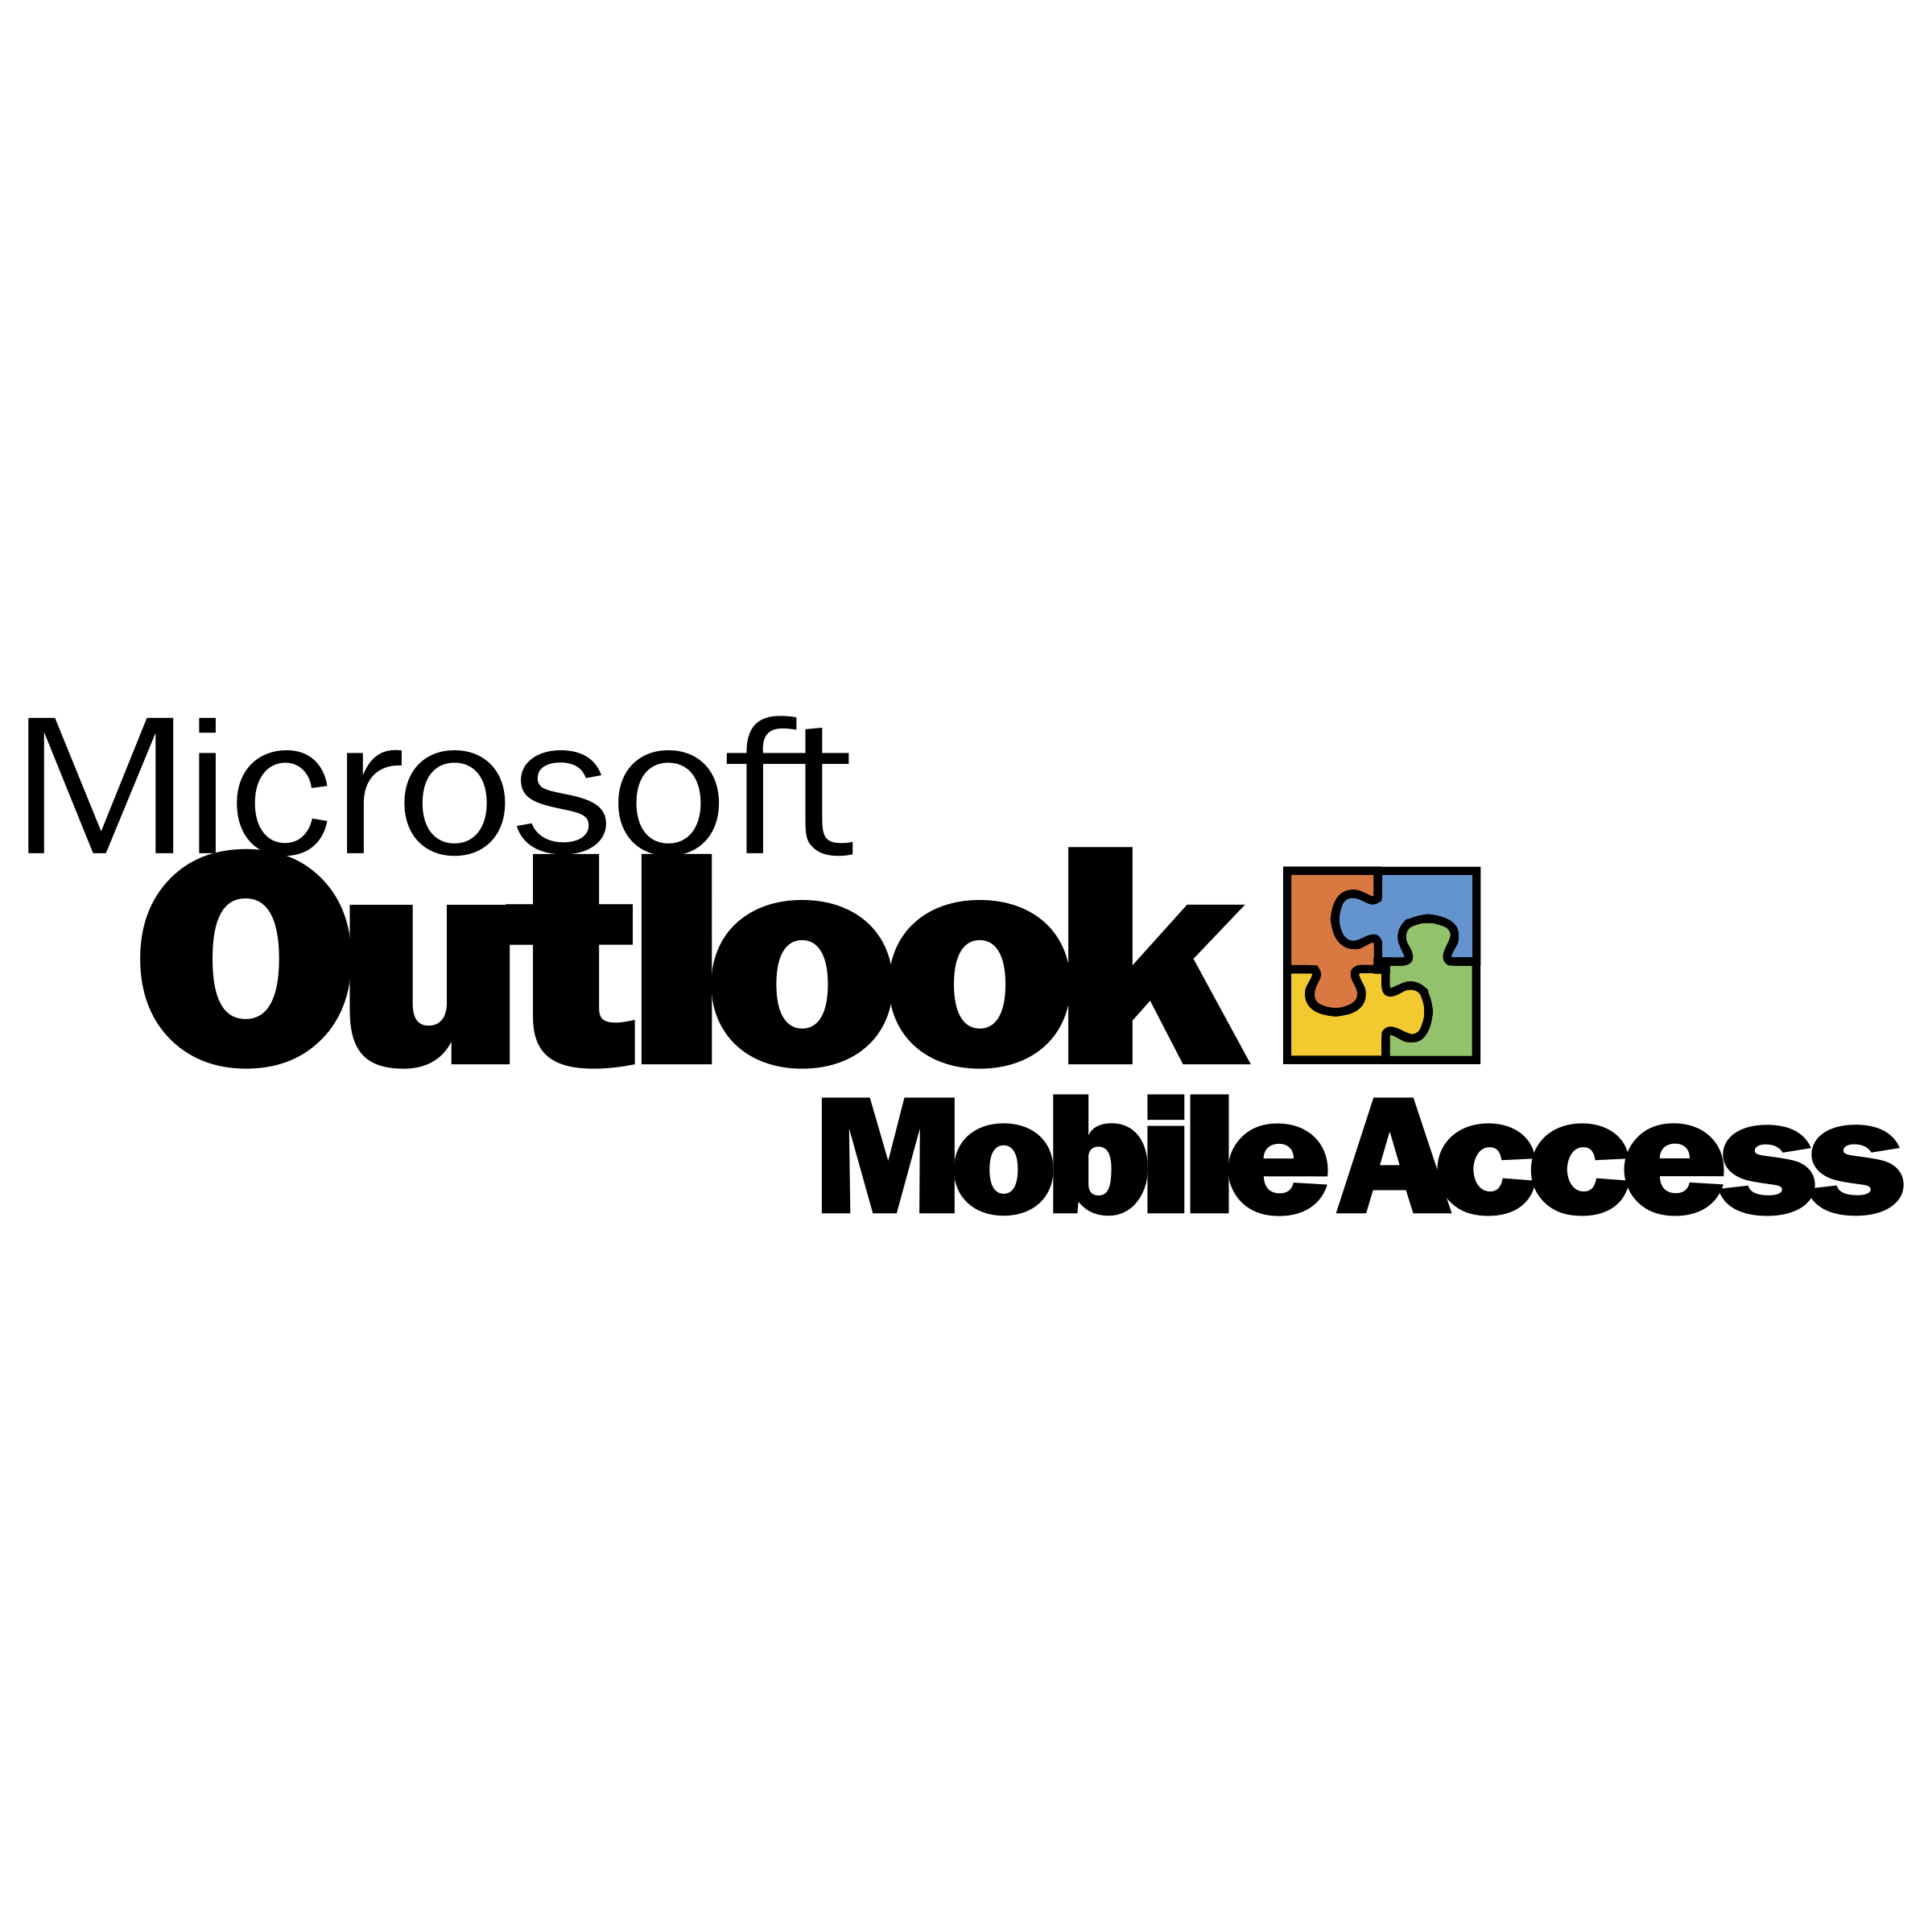 Outlook Logo - Microsoft Outlook Mobile Access Logo PNG Transparent & SVG Vector